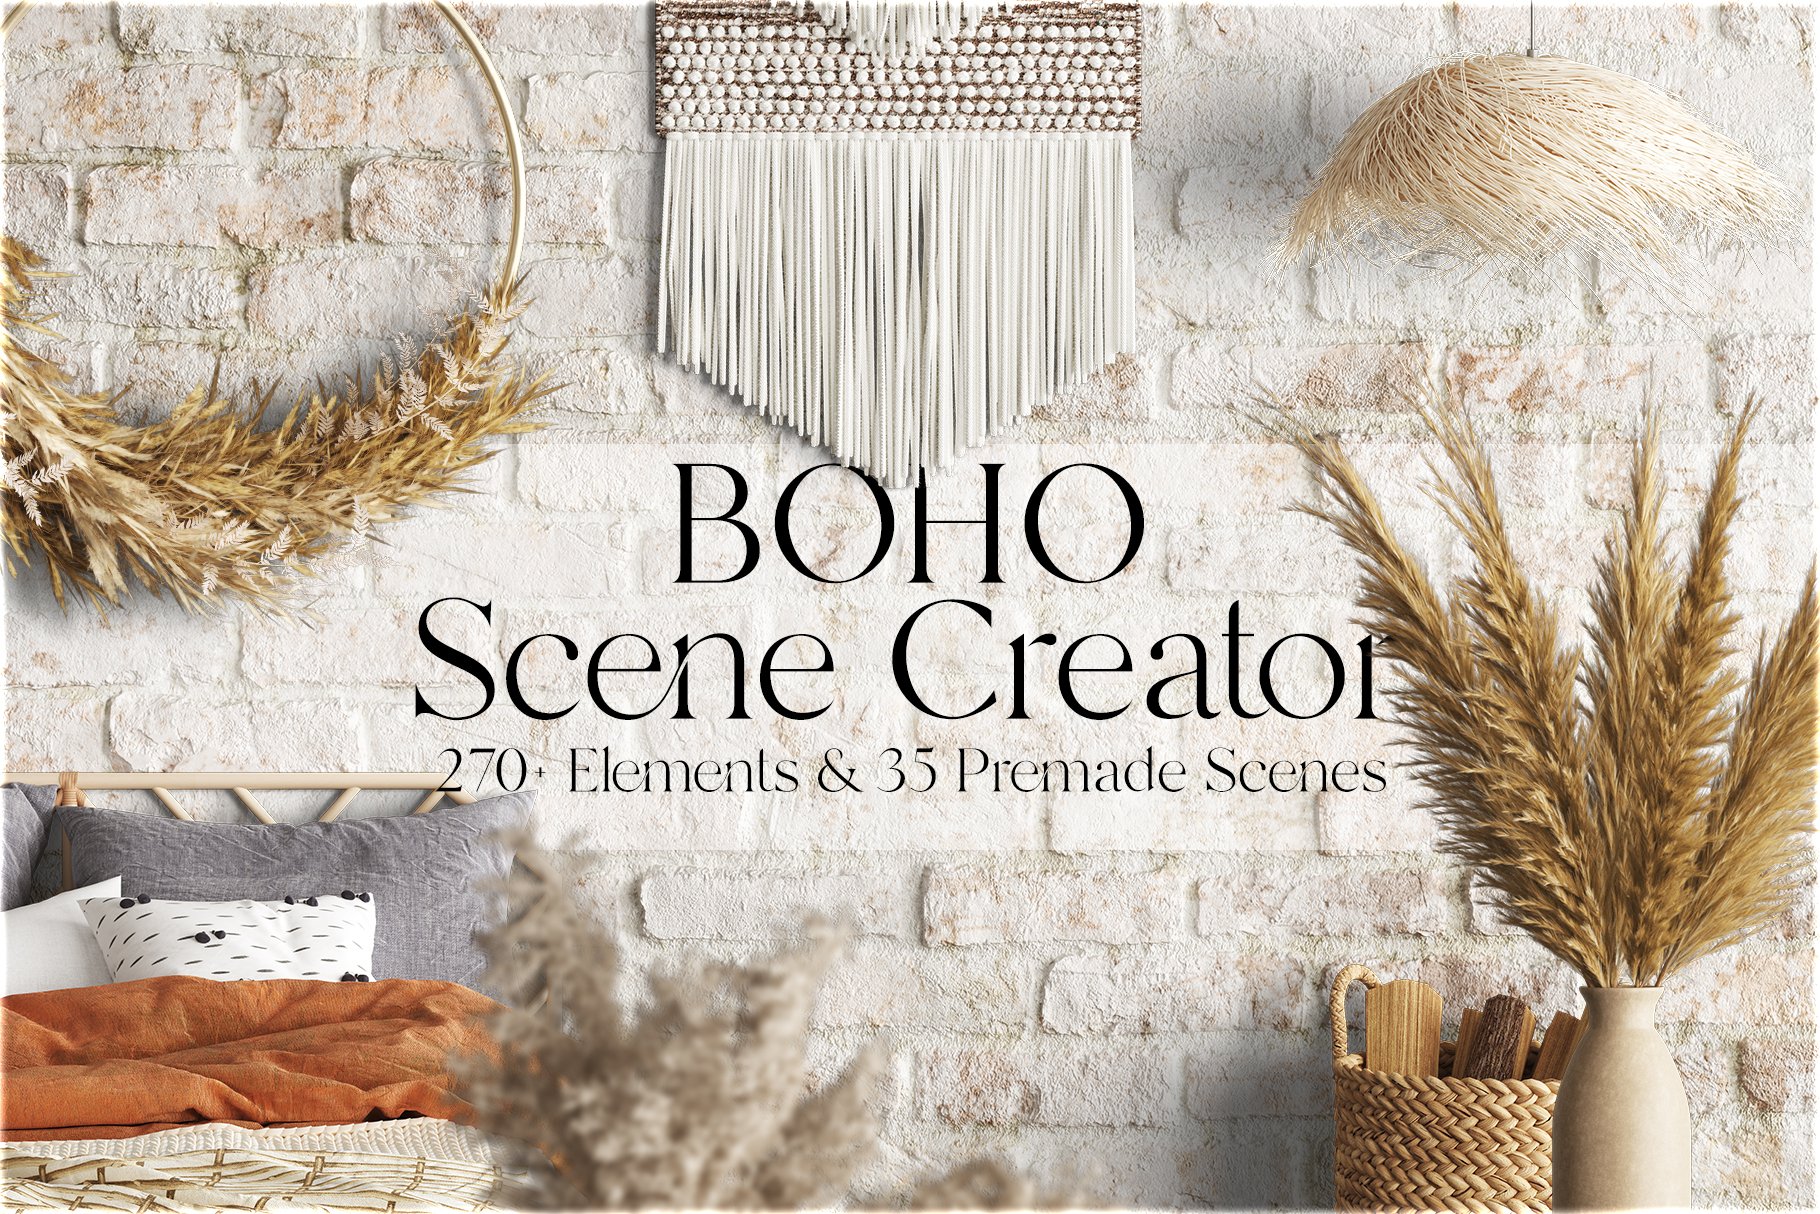 Boho Style Scene Creator - Frames cover image.